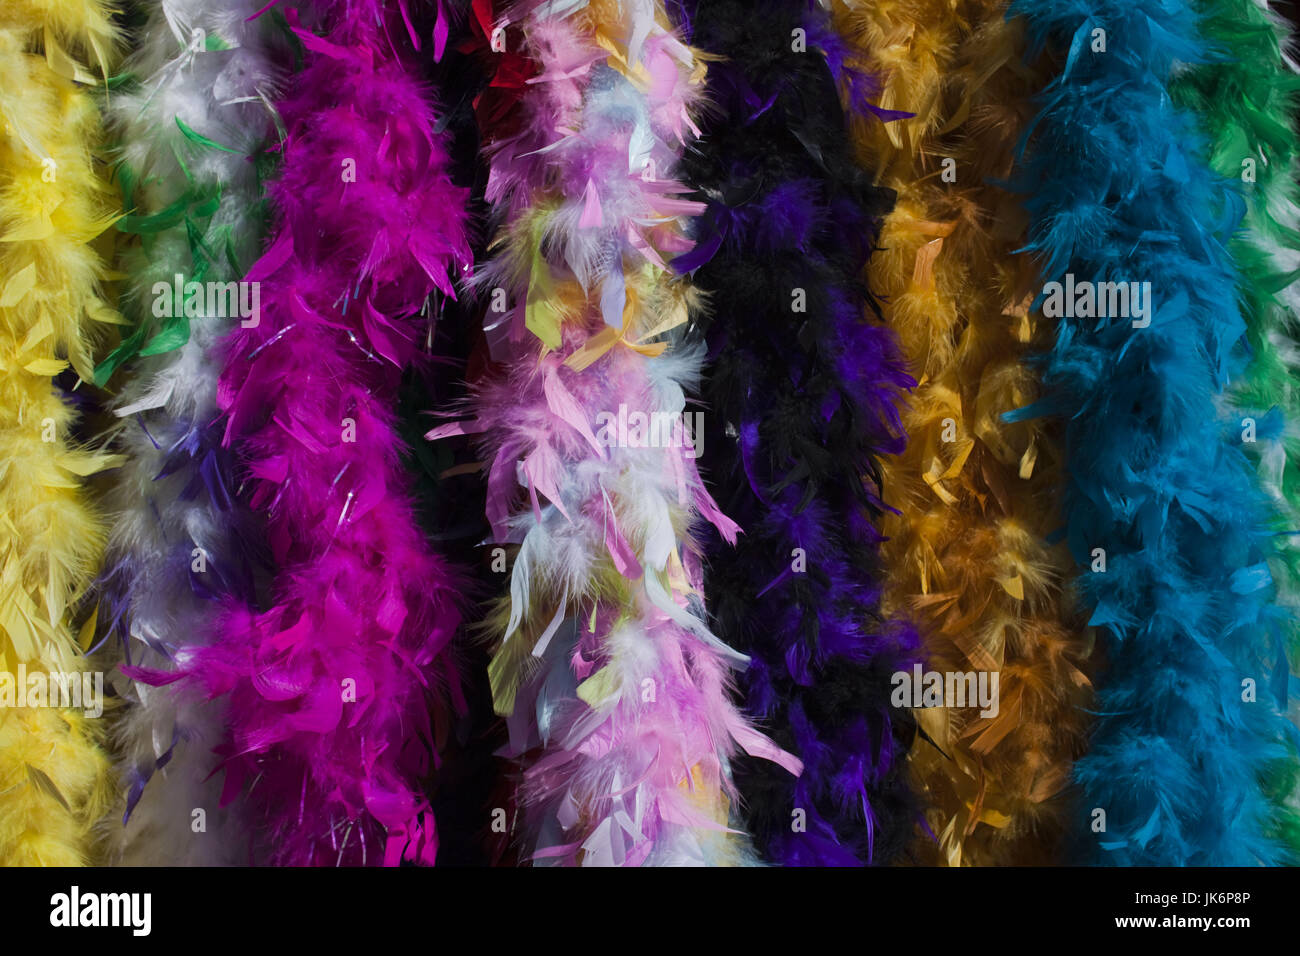 USA, Louisiana, New Orleans, French Quarter, French Market, feather boas Stock Photo